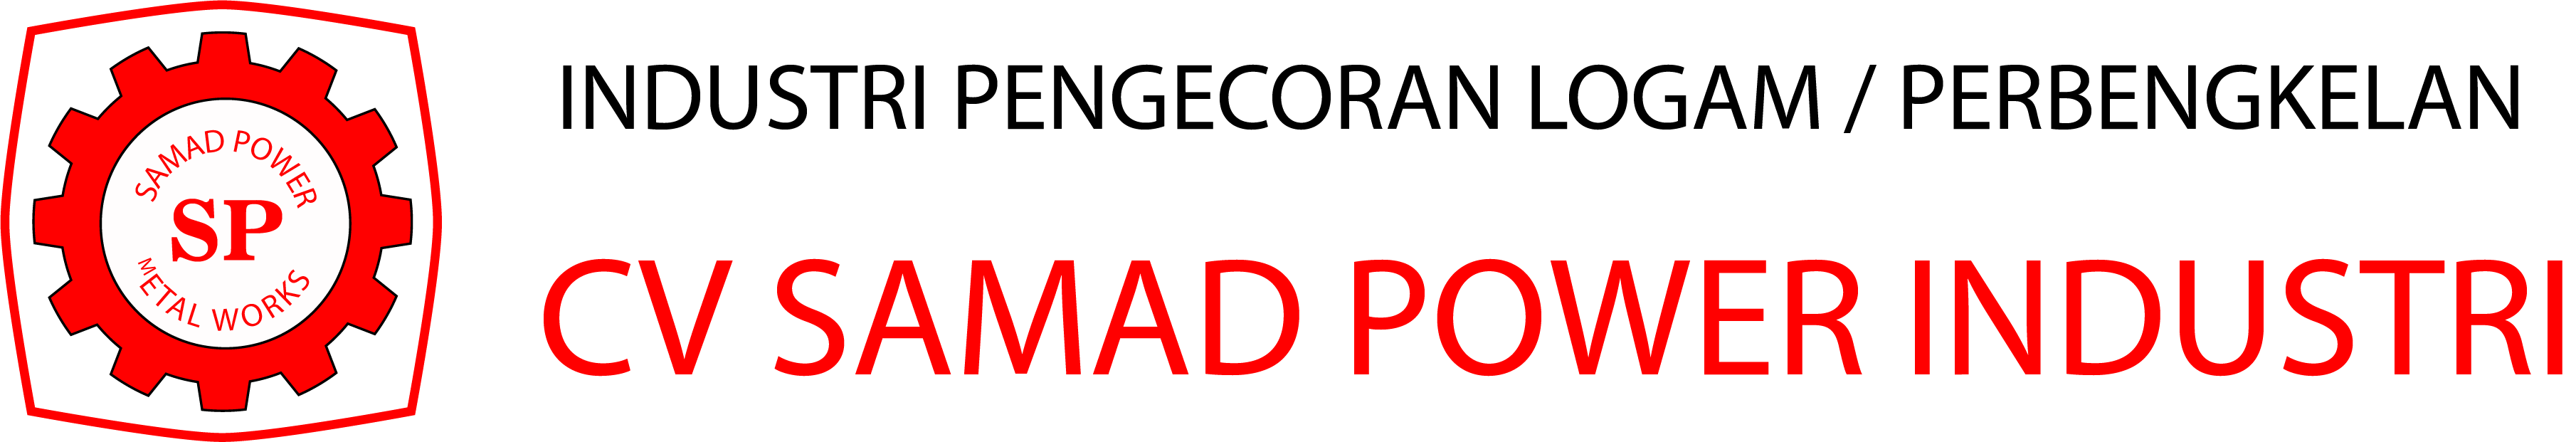 logo CV Samad Power